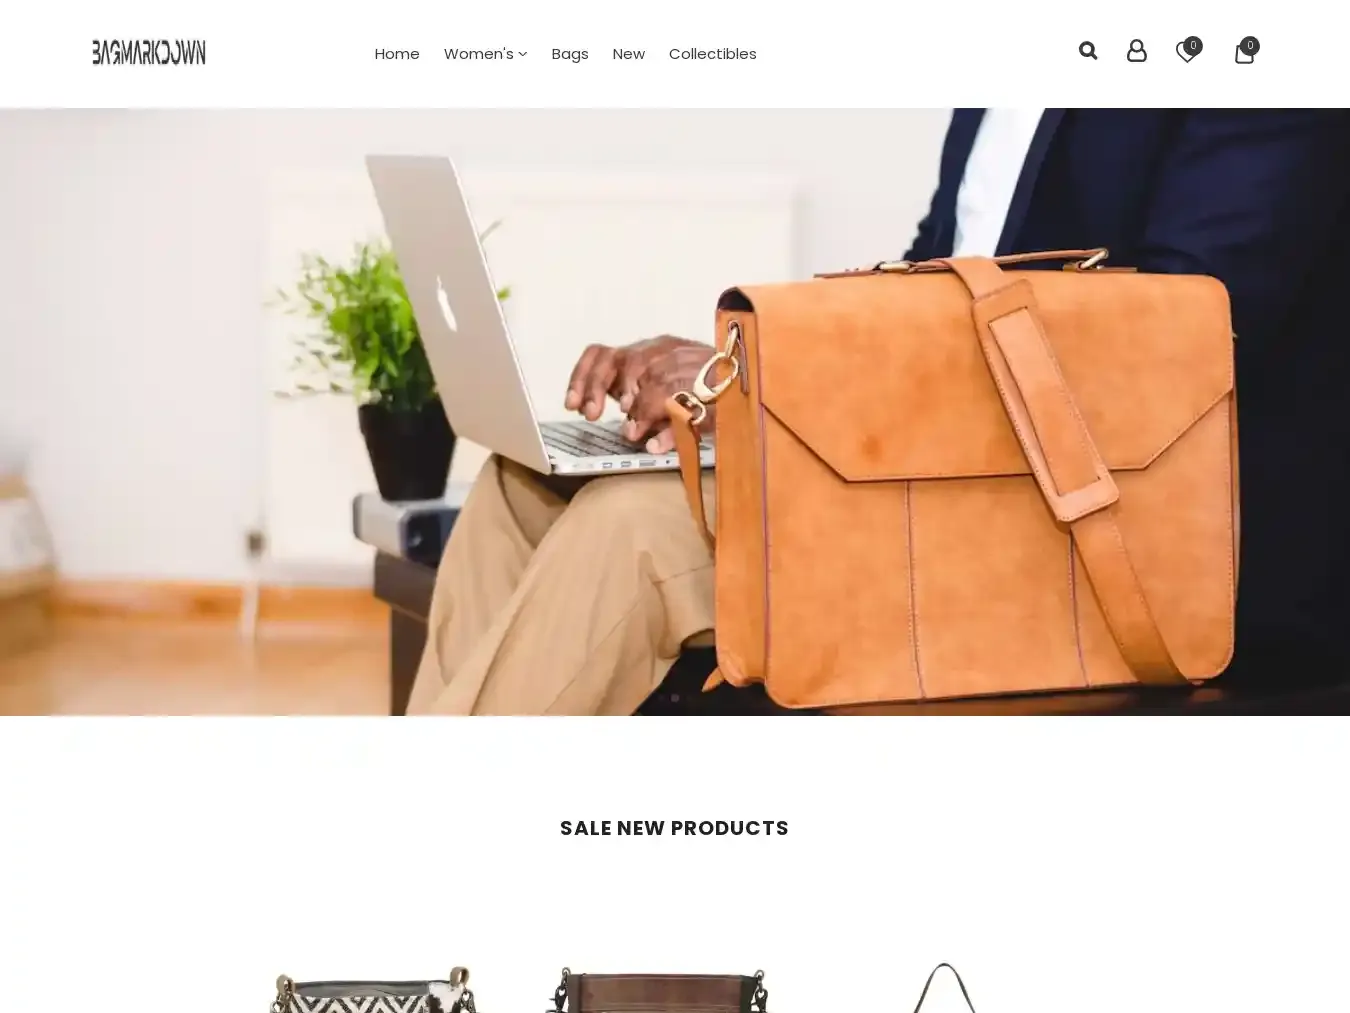 Bagmarkdown.com Fraudulent Fashion website.